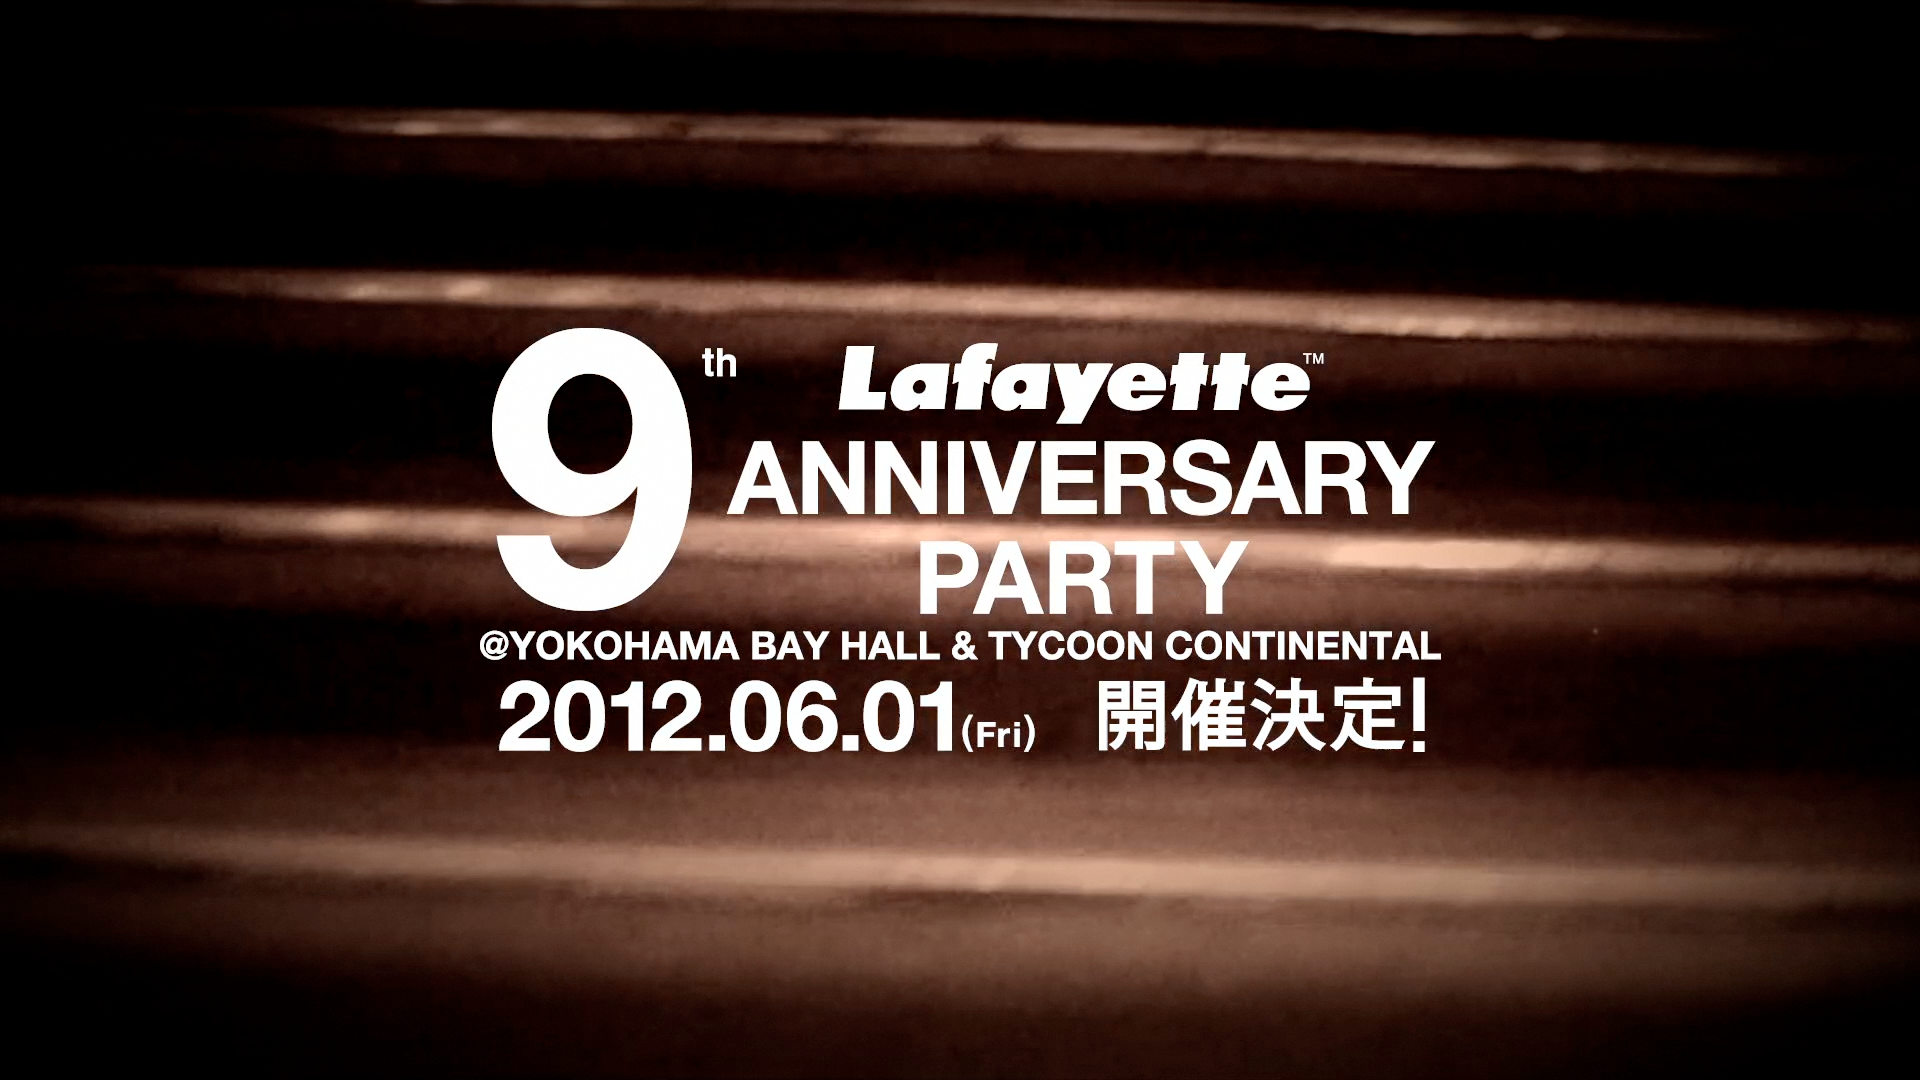 Lafayette 9th ANNIVERSARY PARTY 開催決定!!!